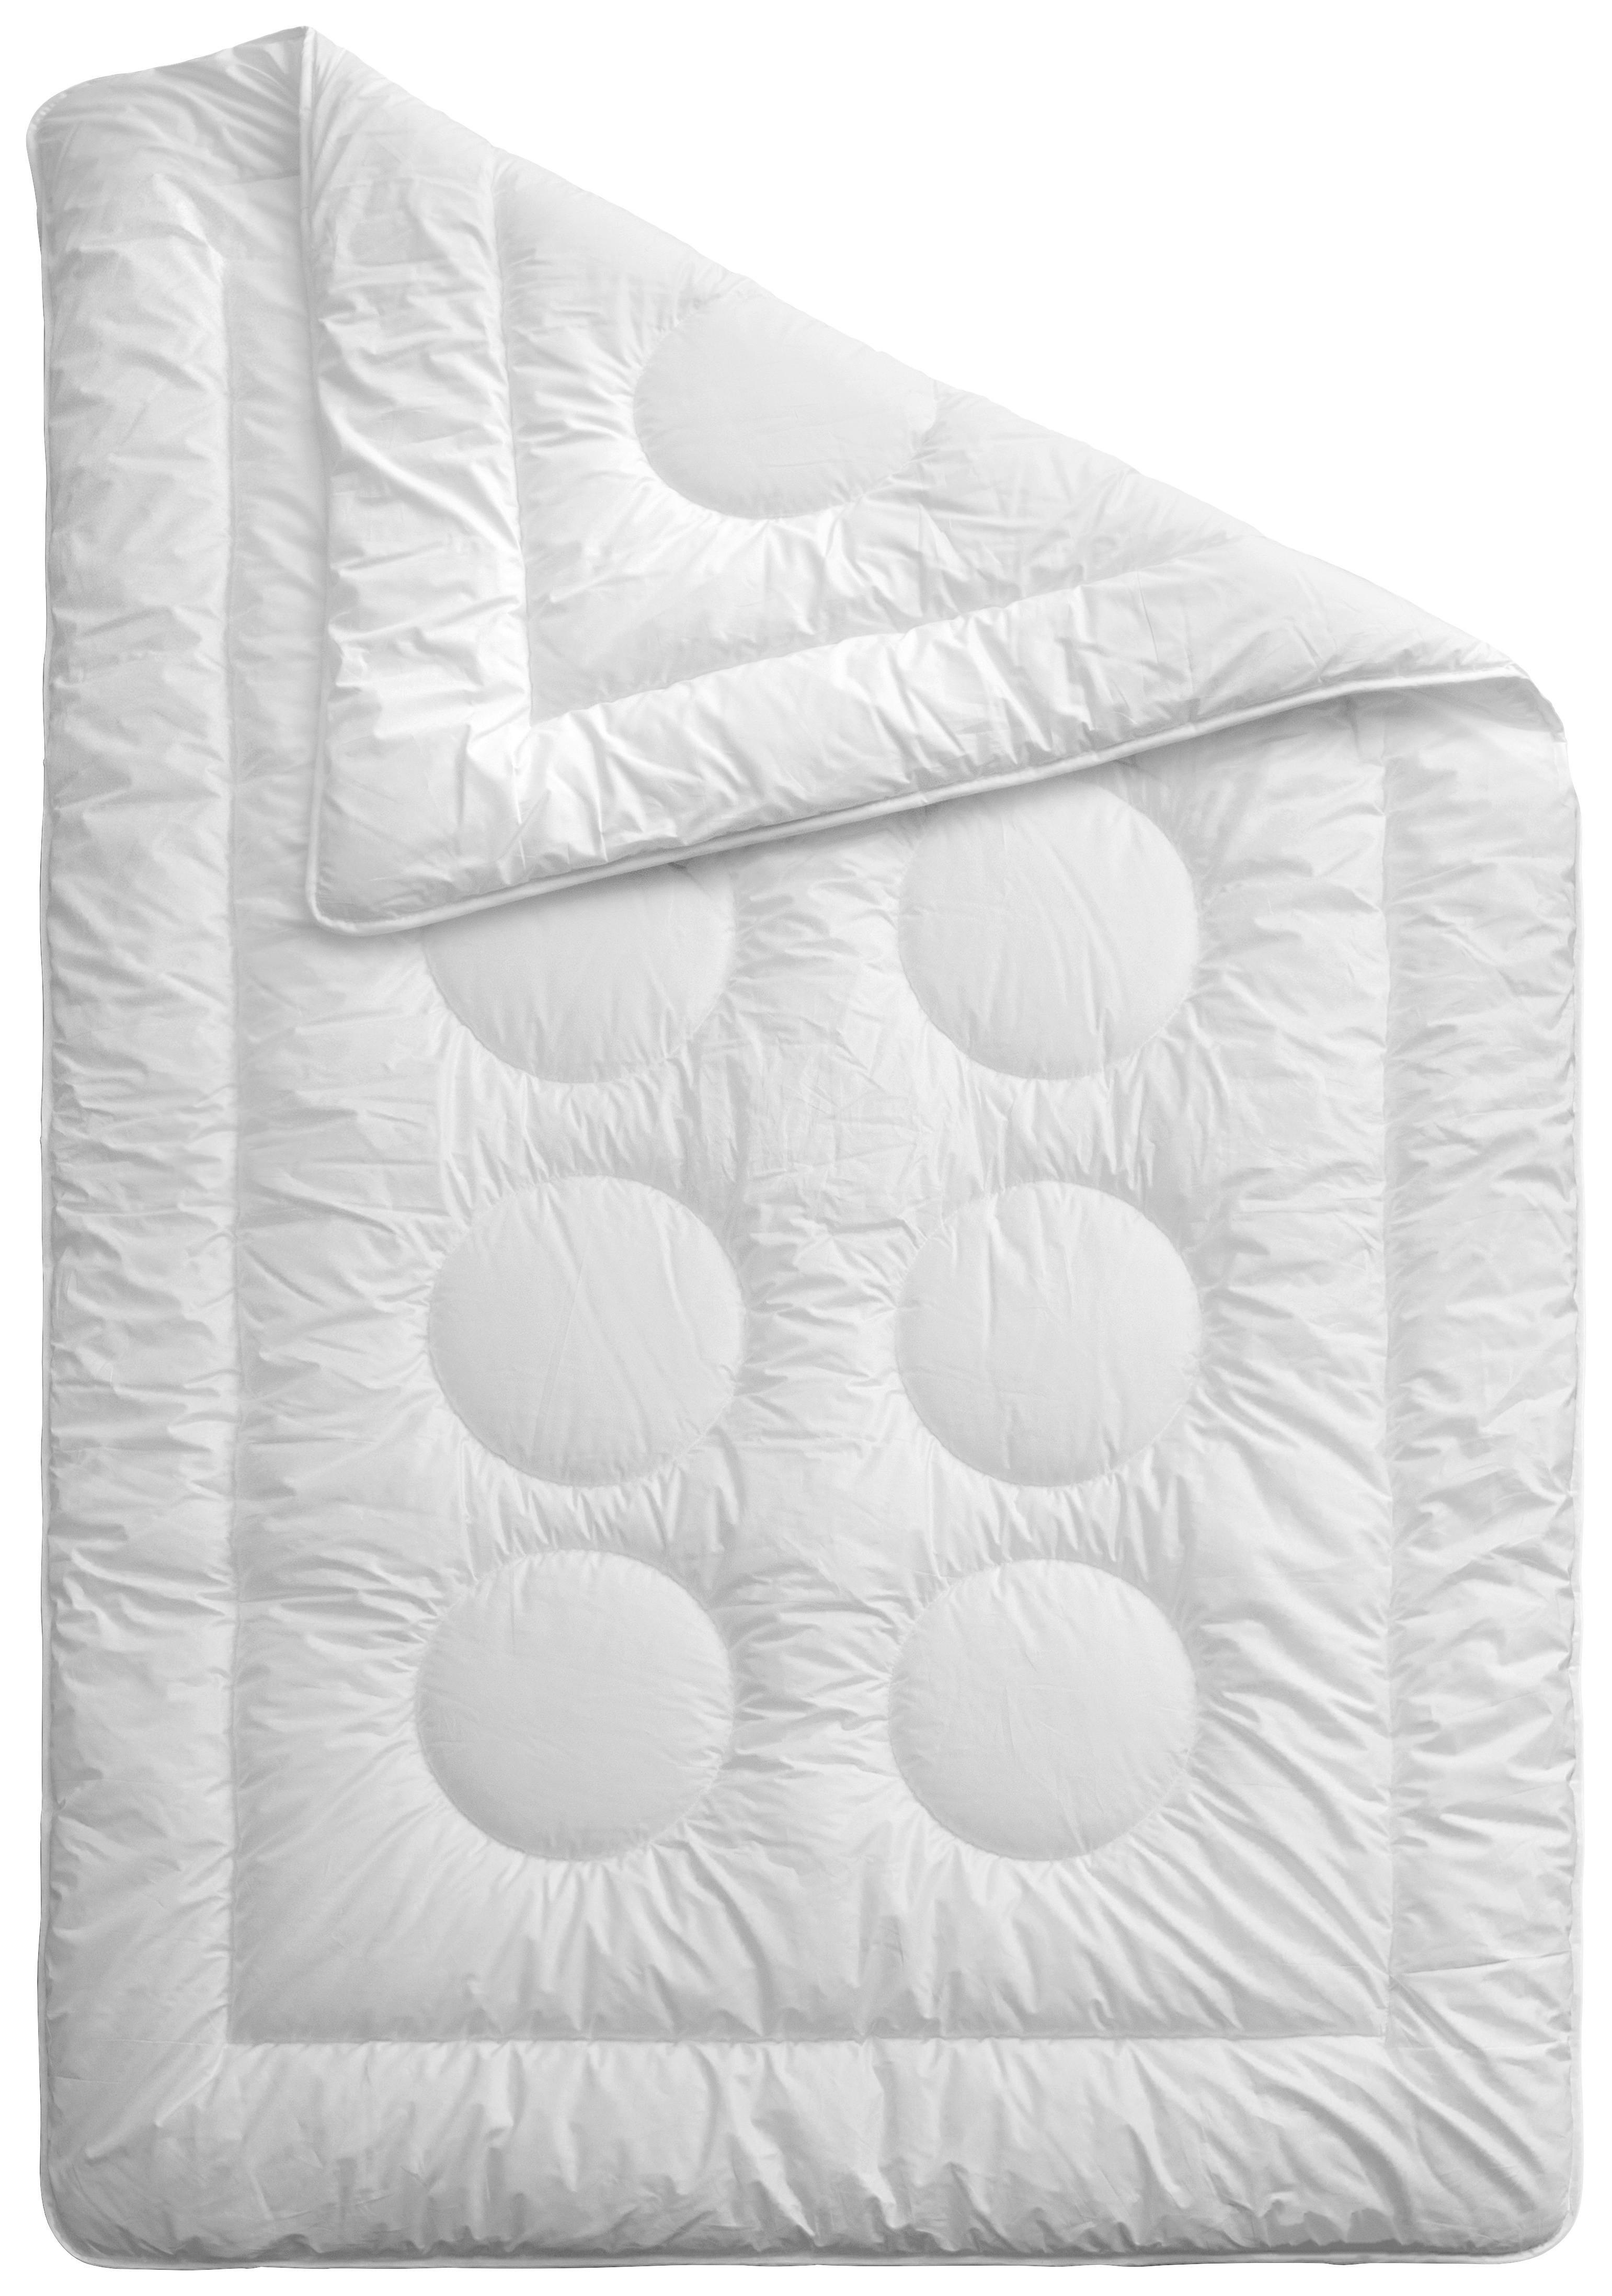 Zimná Prikrývka Dreamium - biela, textil/plast (135-140/200cm) - Premium Living